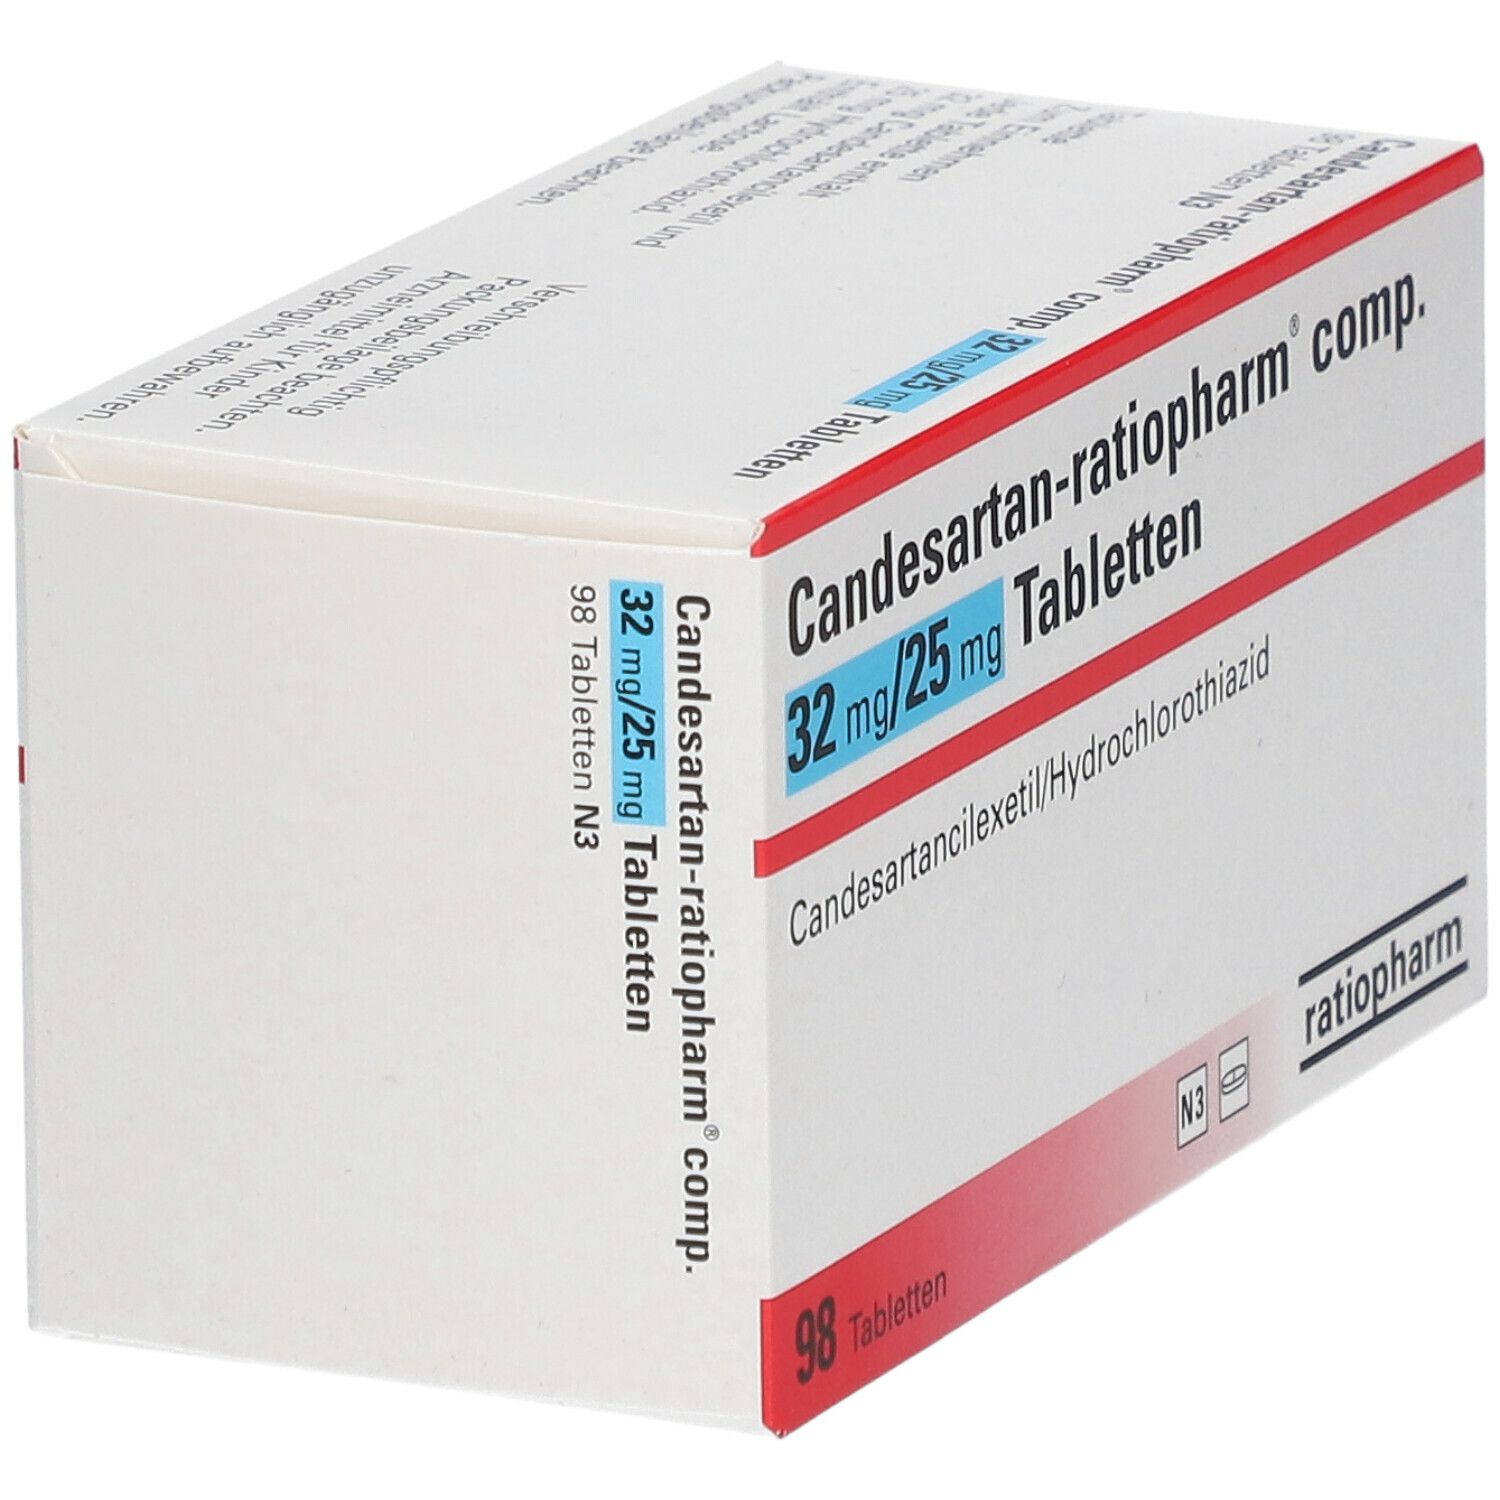 Candesartan-ratiopharm® comp. 32 mg/25 mg